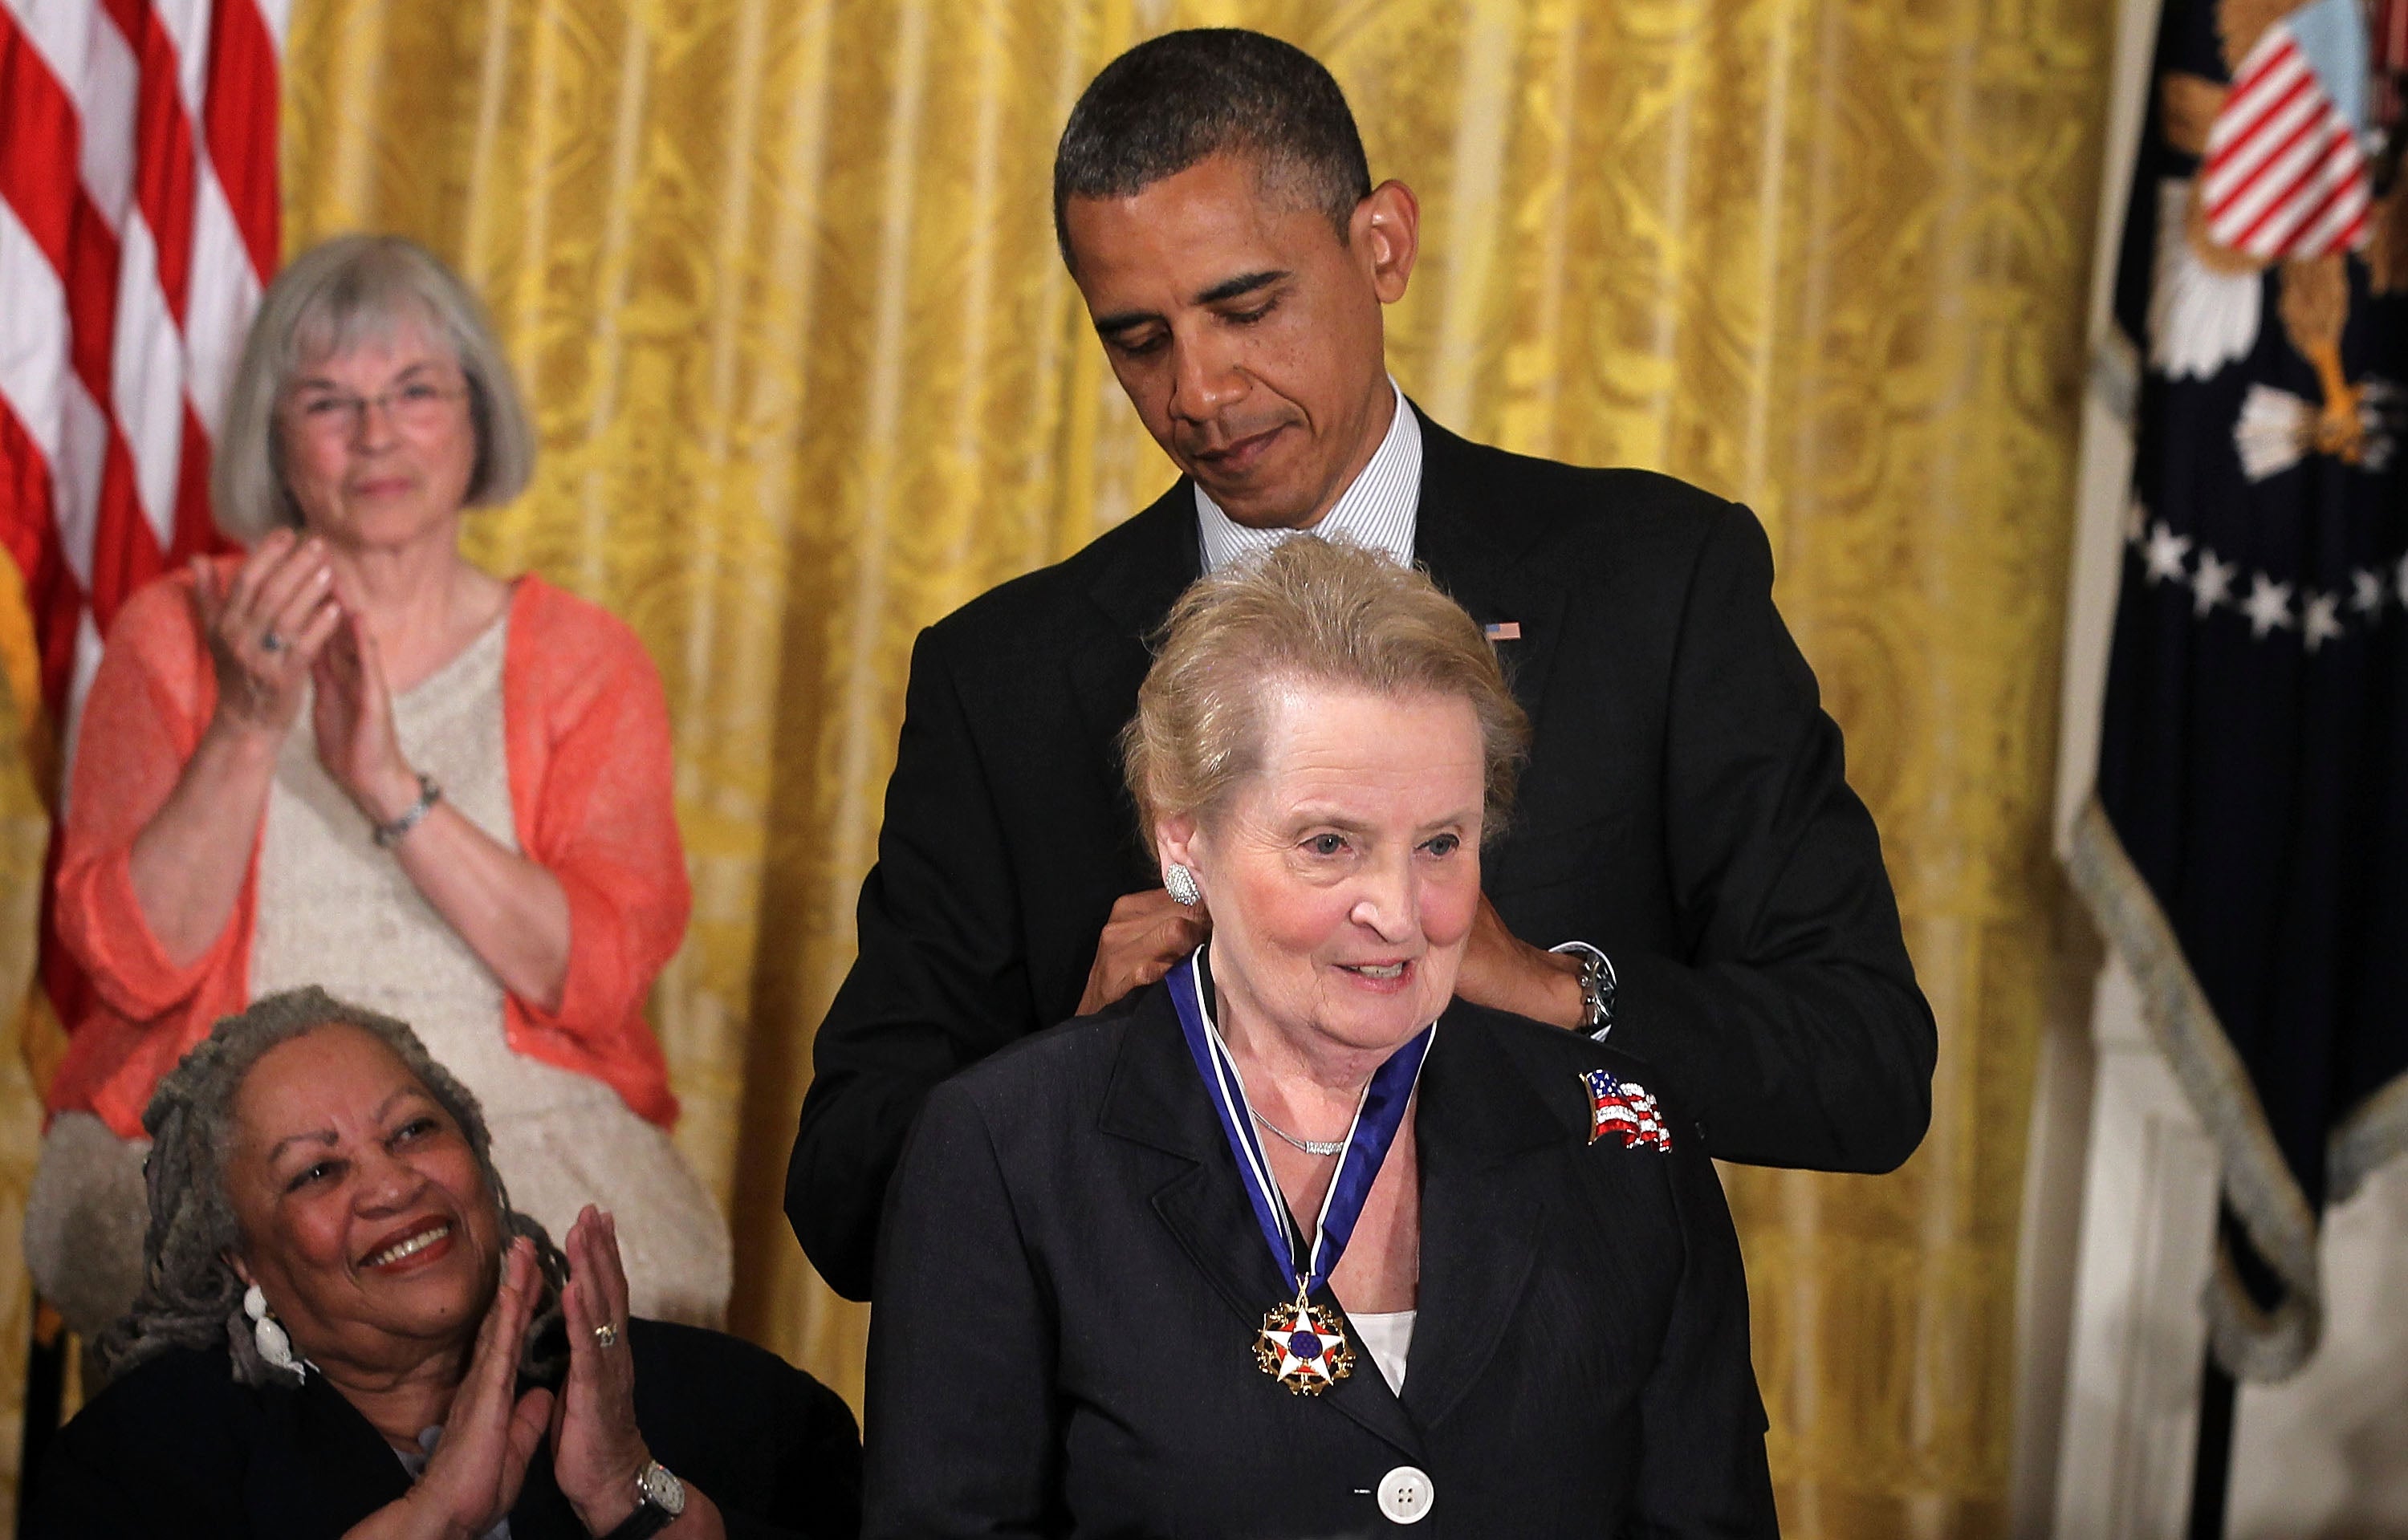 Madeleine Albright, first female US secretary of state, dies